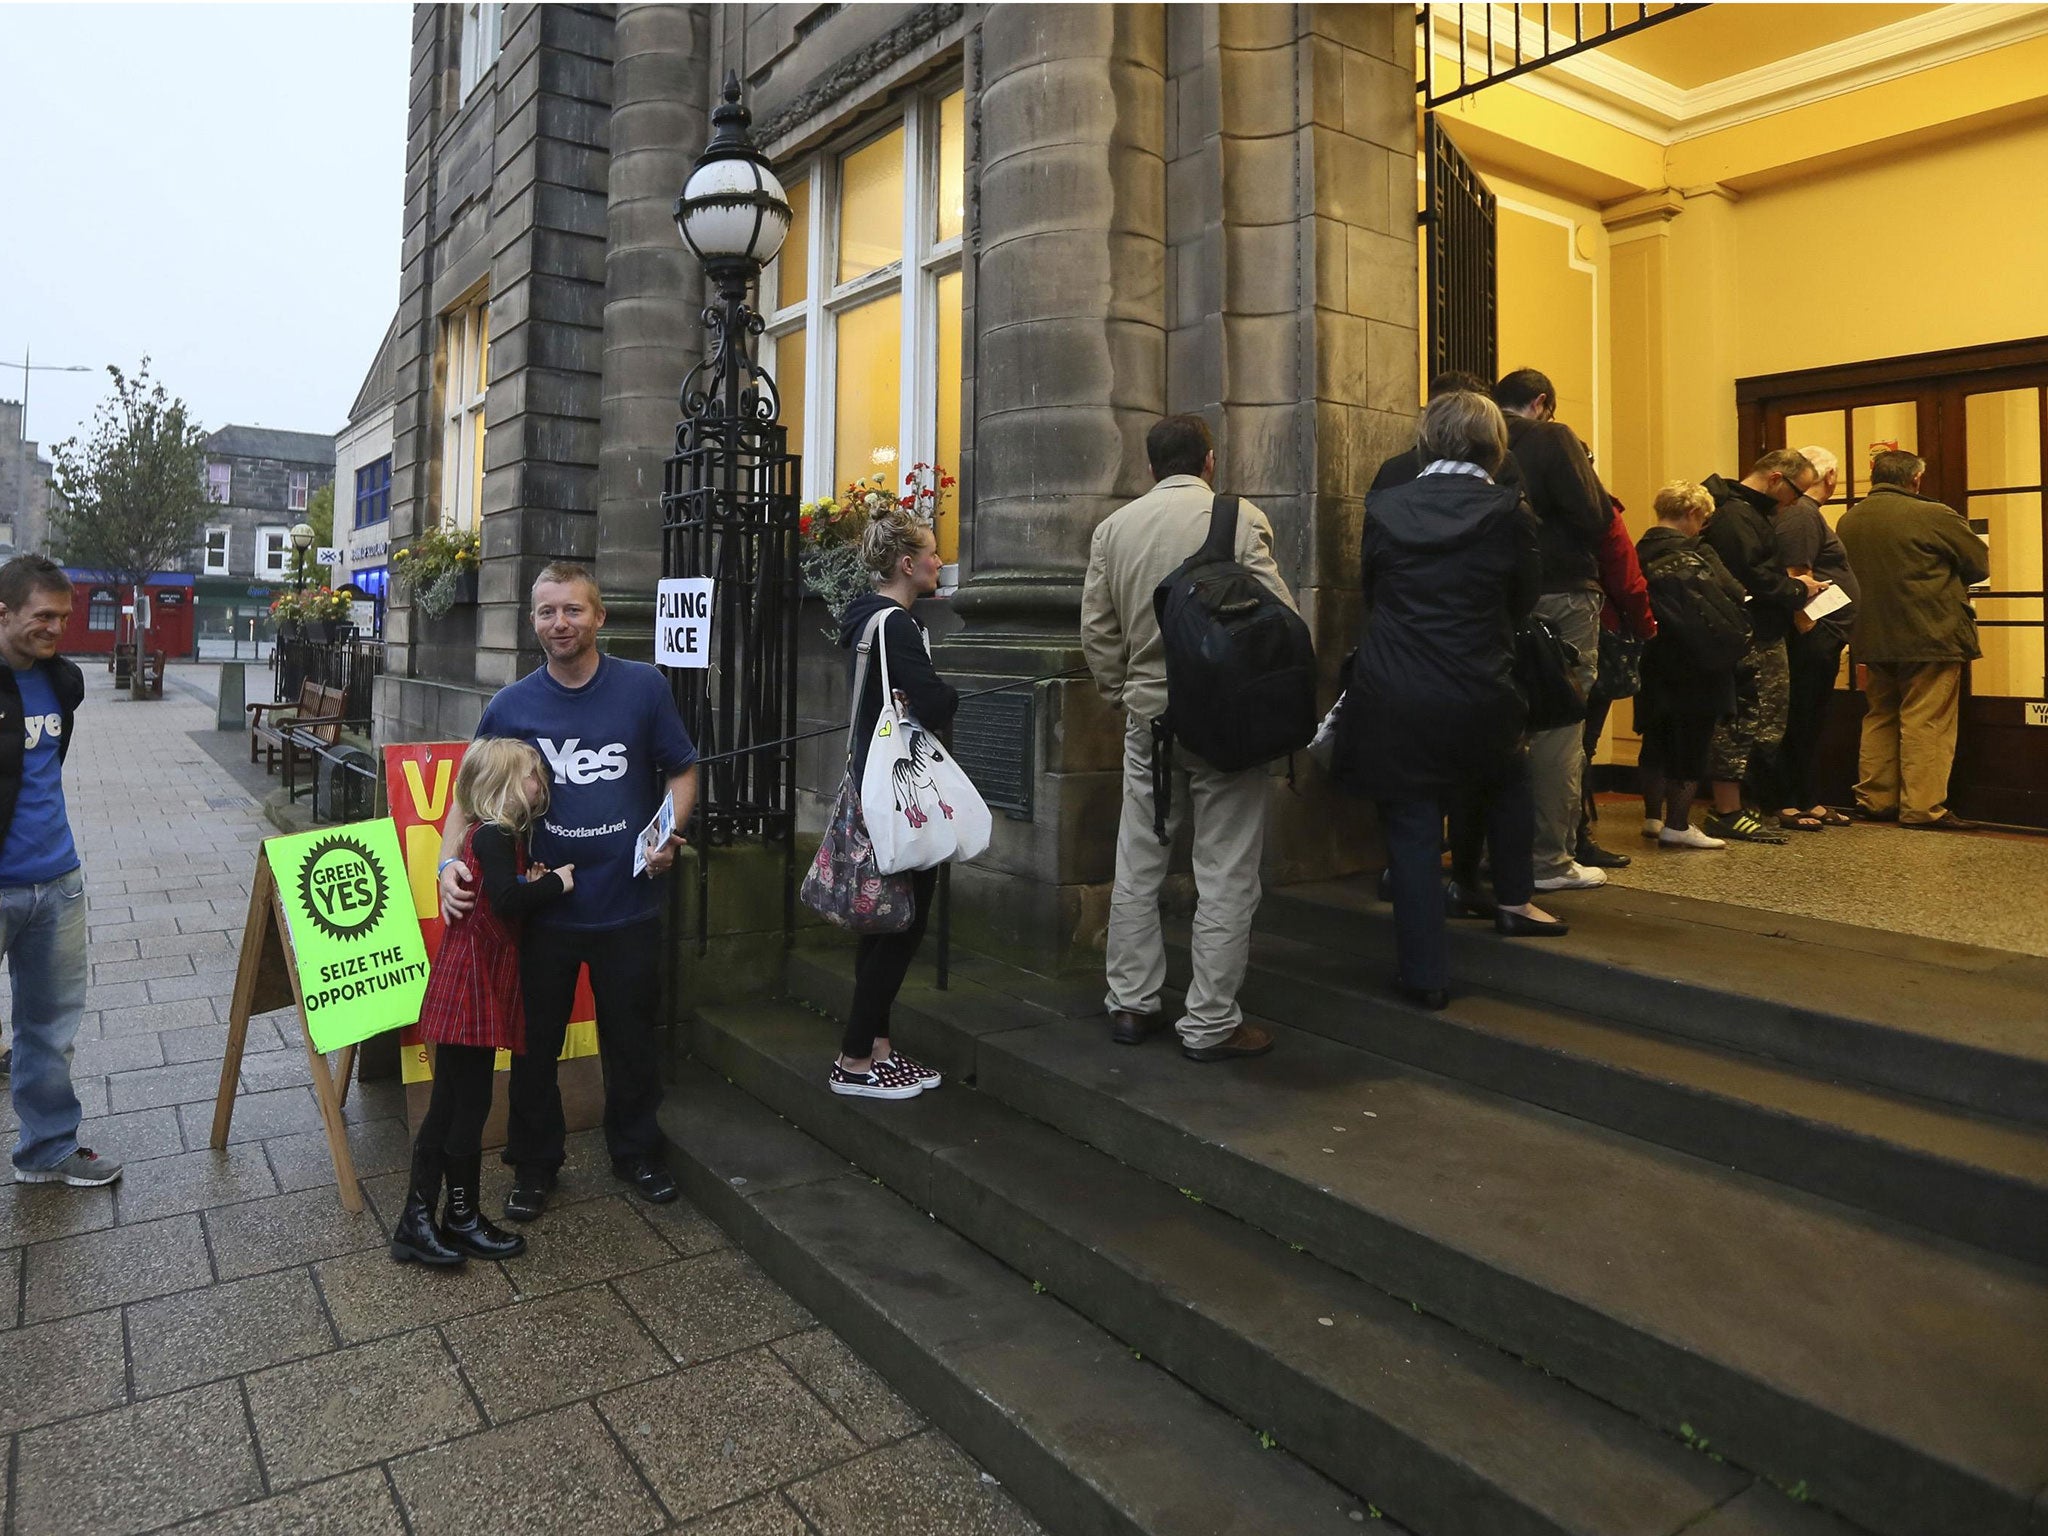 Voters wait for the polling station to open to cast their vote in Portobello near Edinburgh, Scotland September 18, 2014